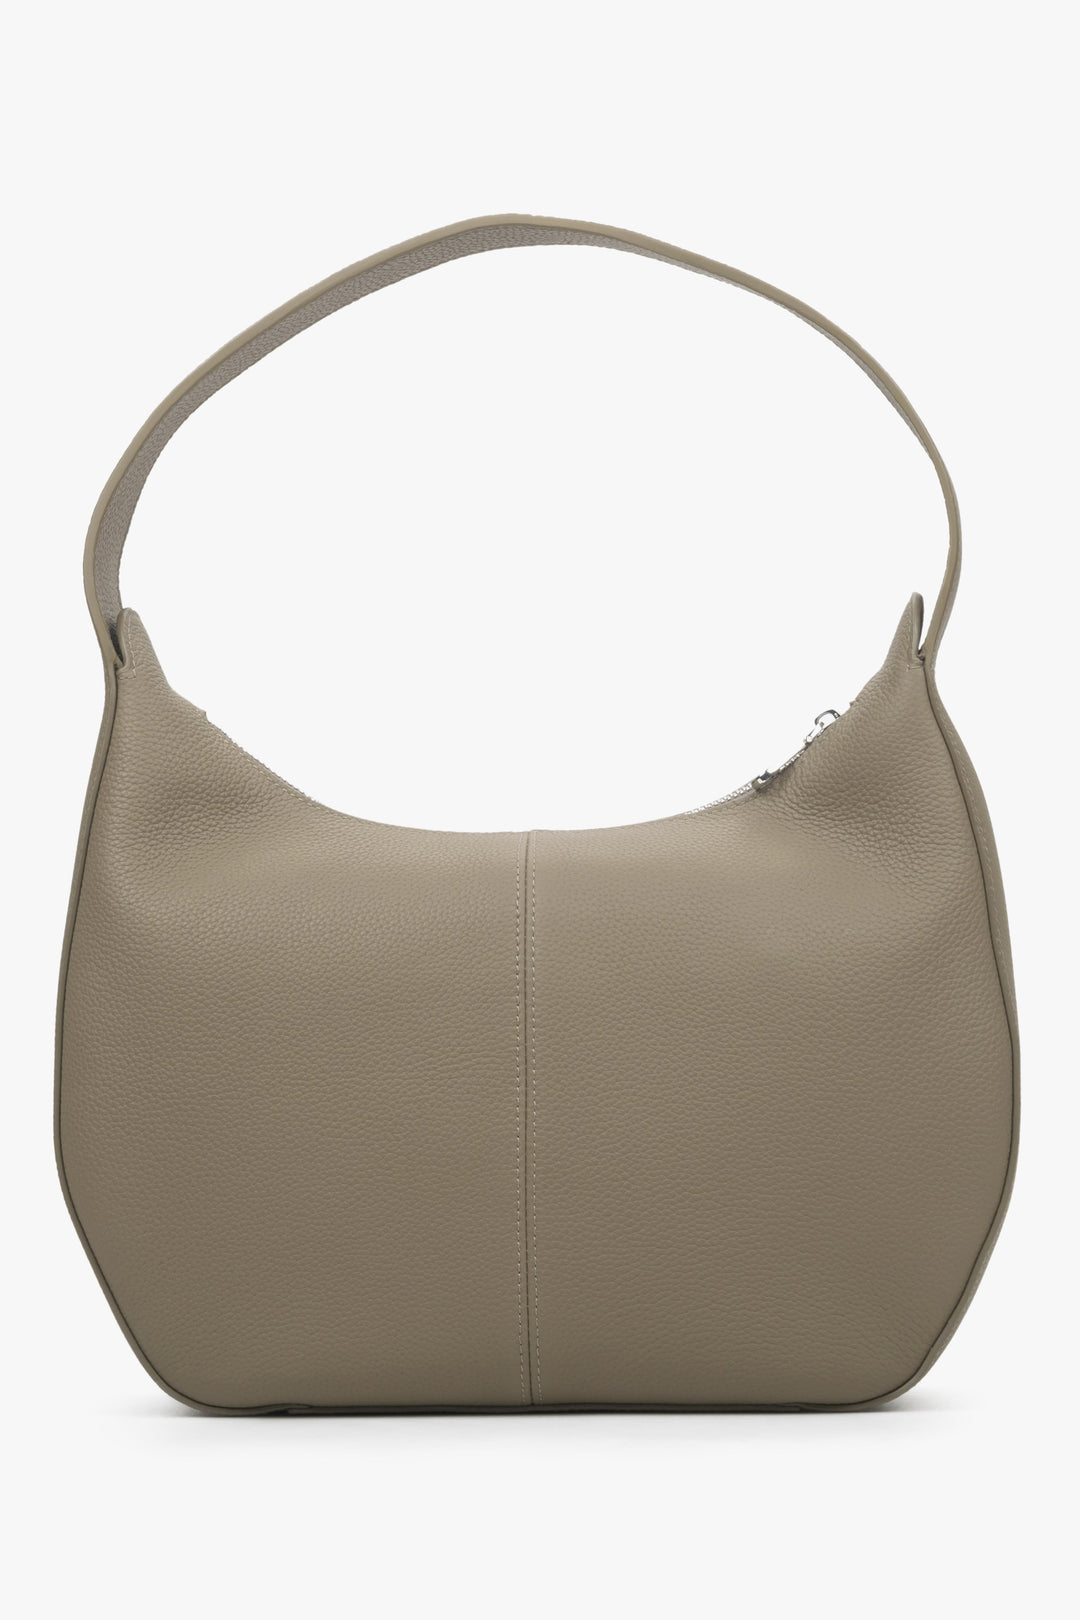 Estro crescent-shaped women's handbag - reverse side, in brown-grey.